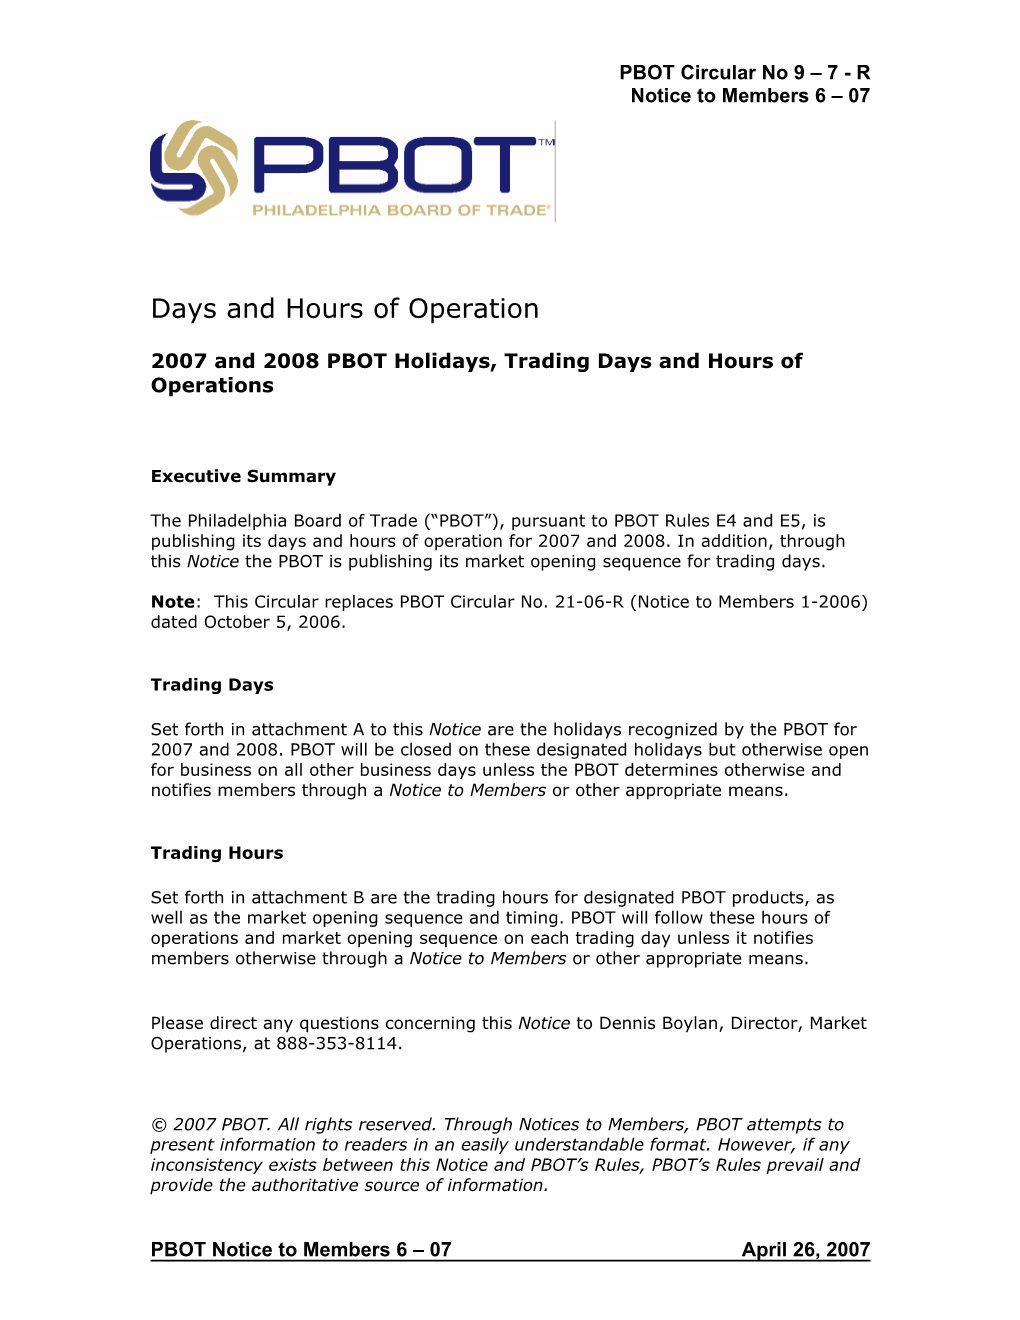 April 26, 2007 PBOT Circular No 9 – 7 - R Notice to Members 6 – 07